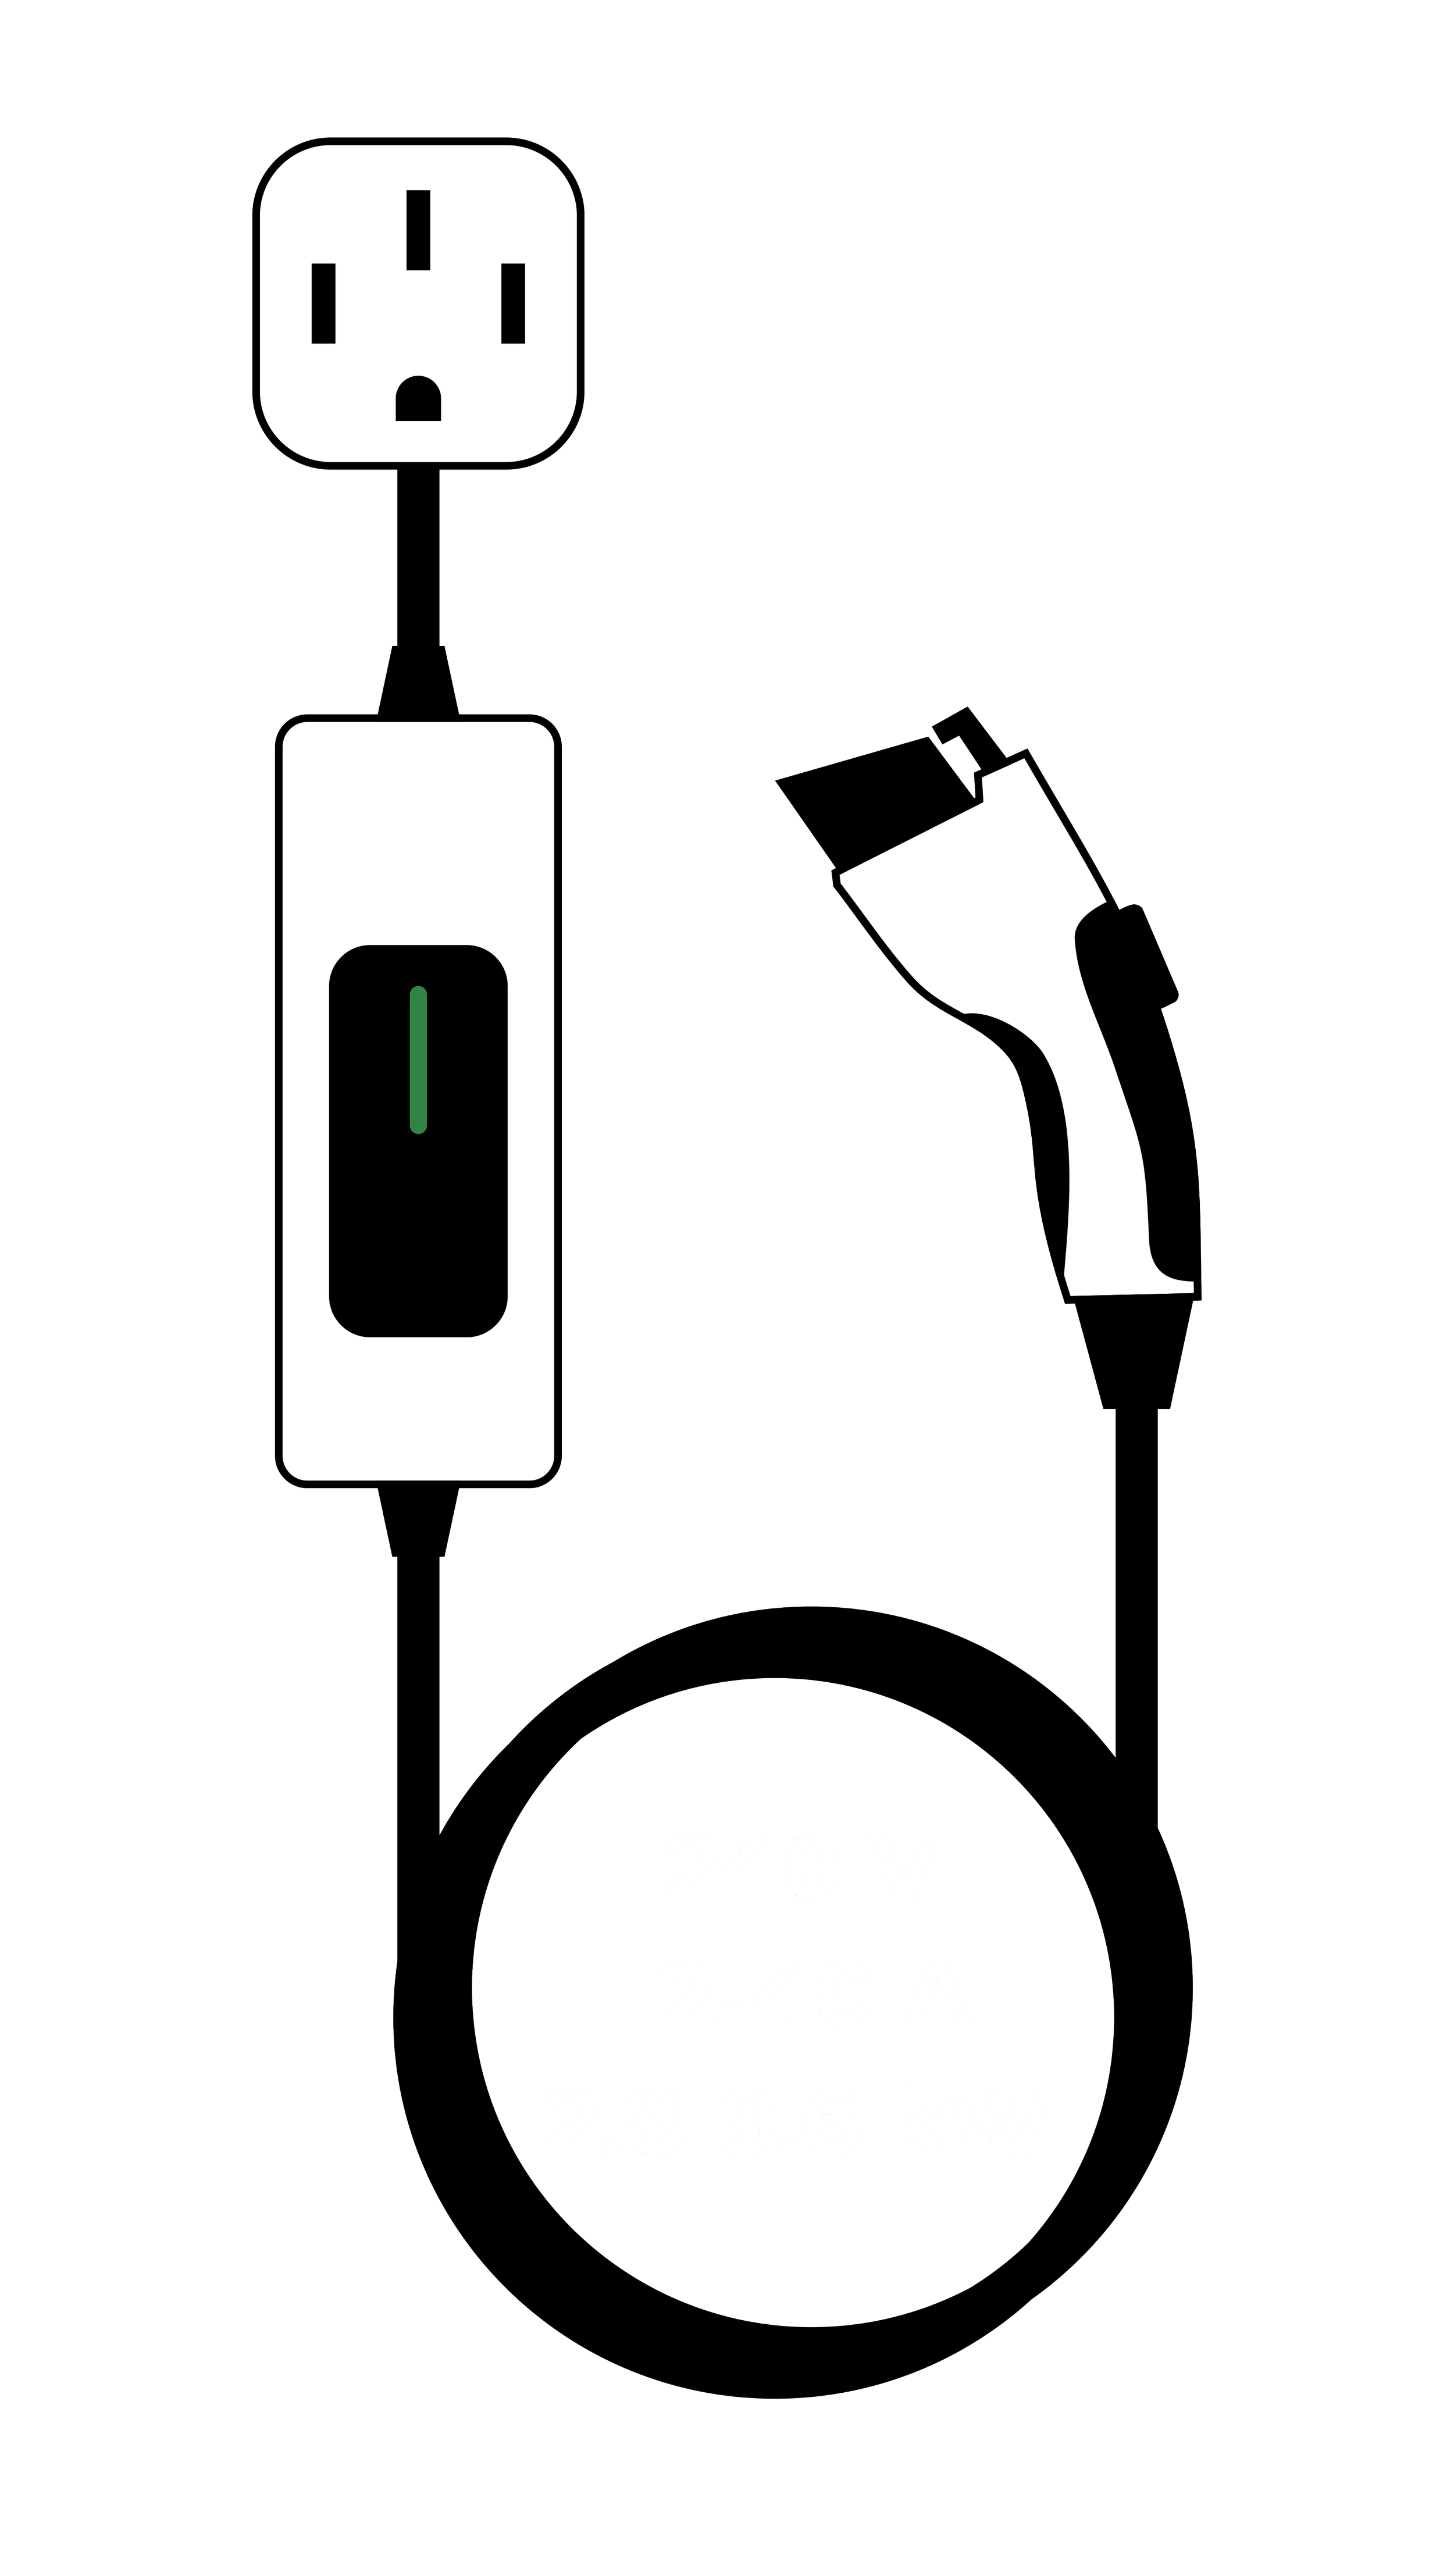 Level 2 (240V) Portable EVSE